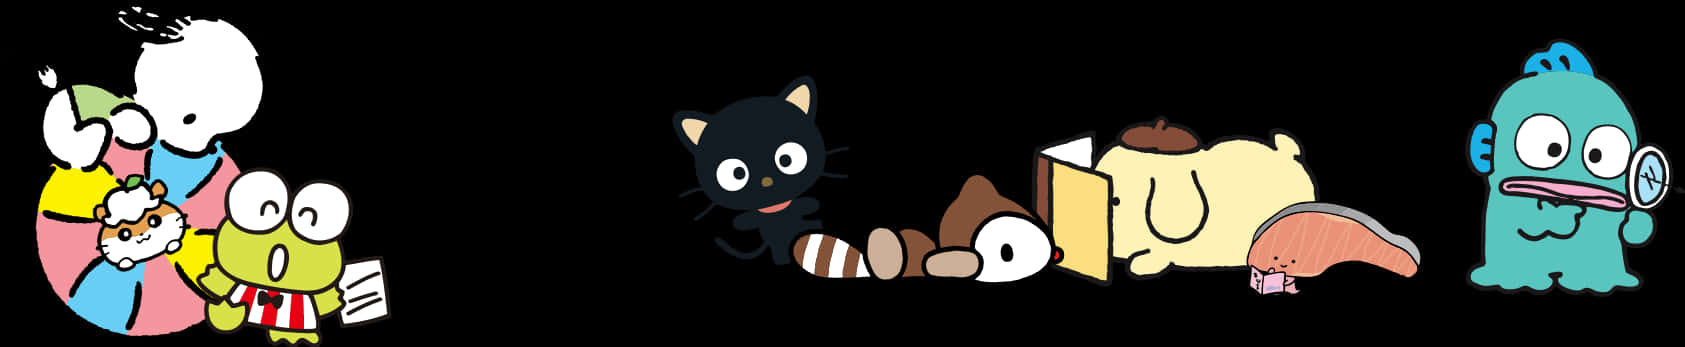 A Cartoon Cat And Raccoon